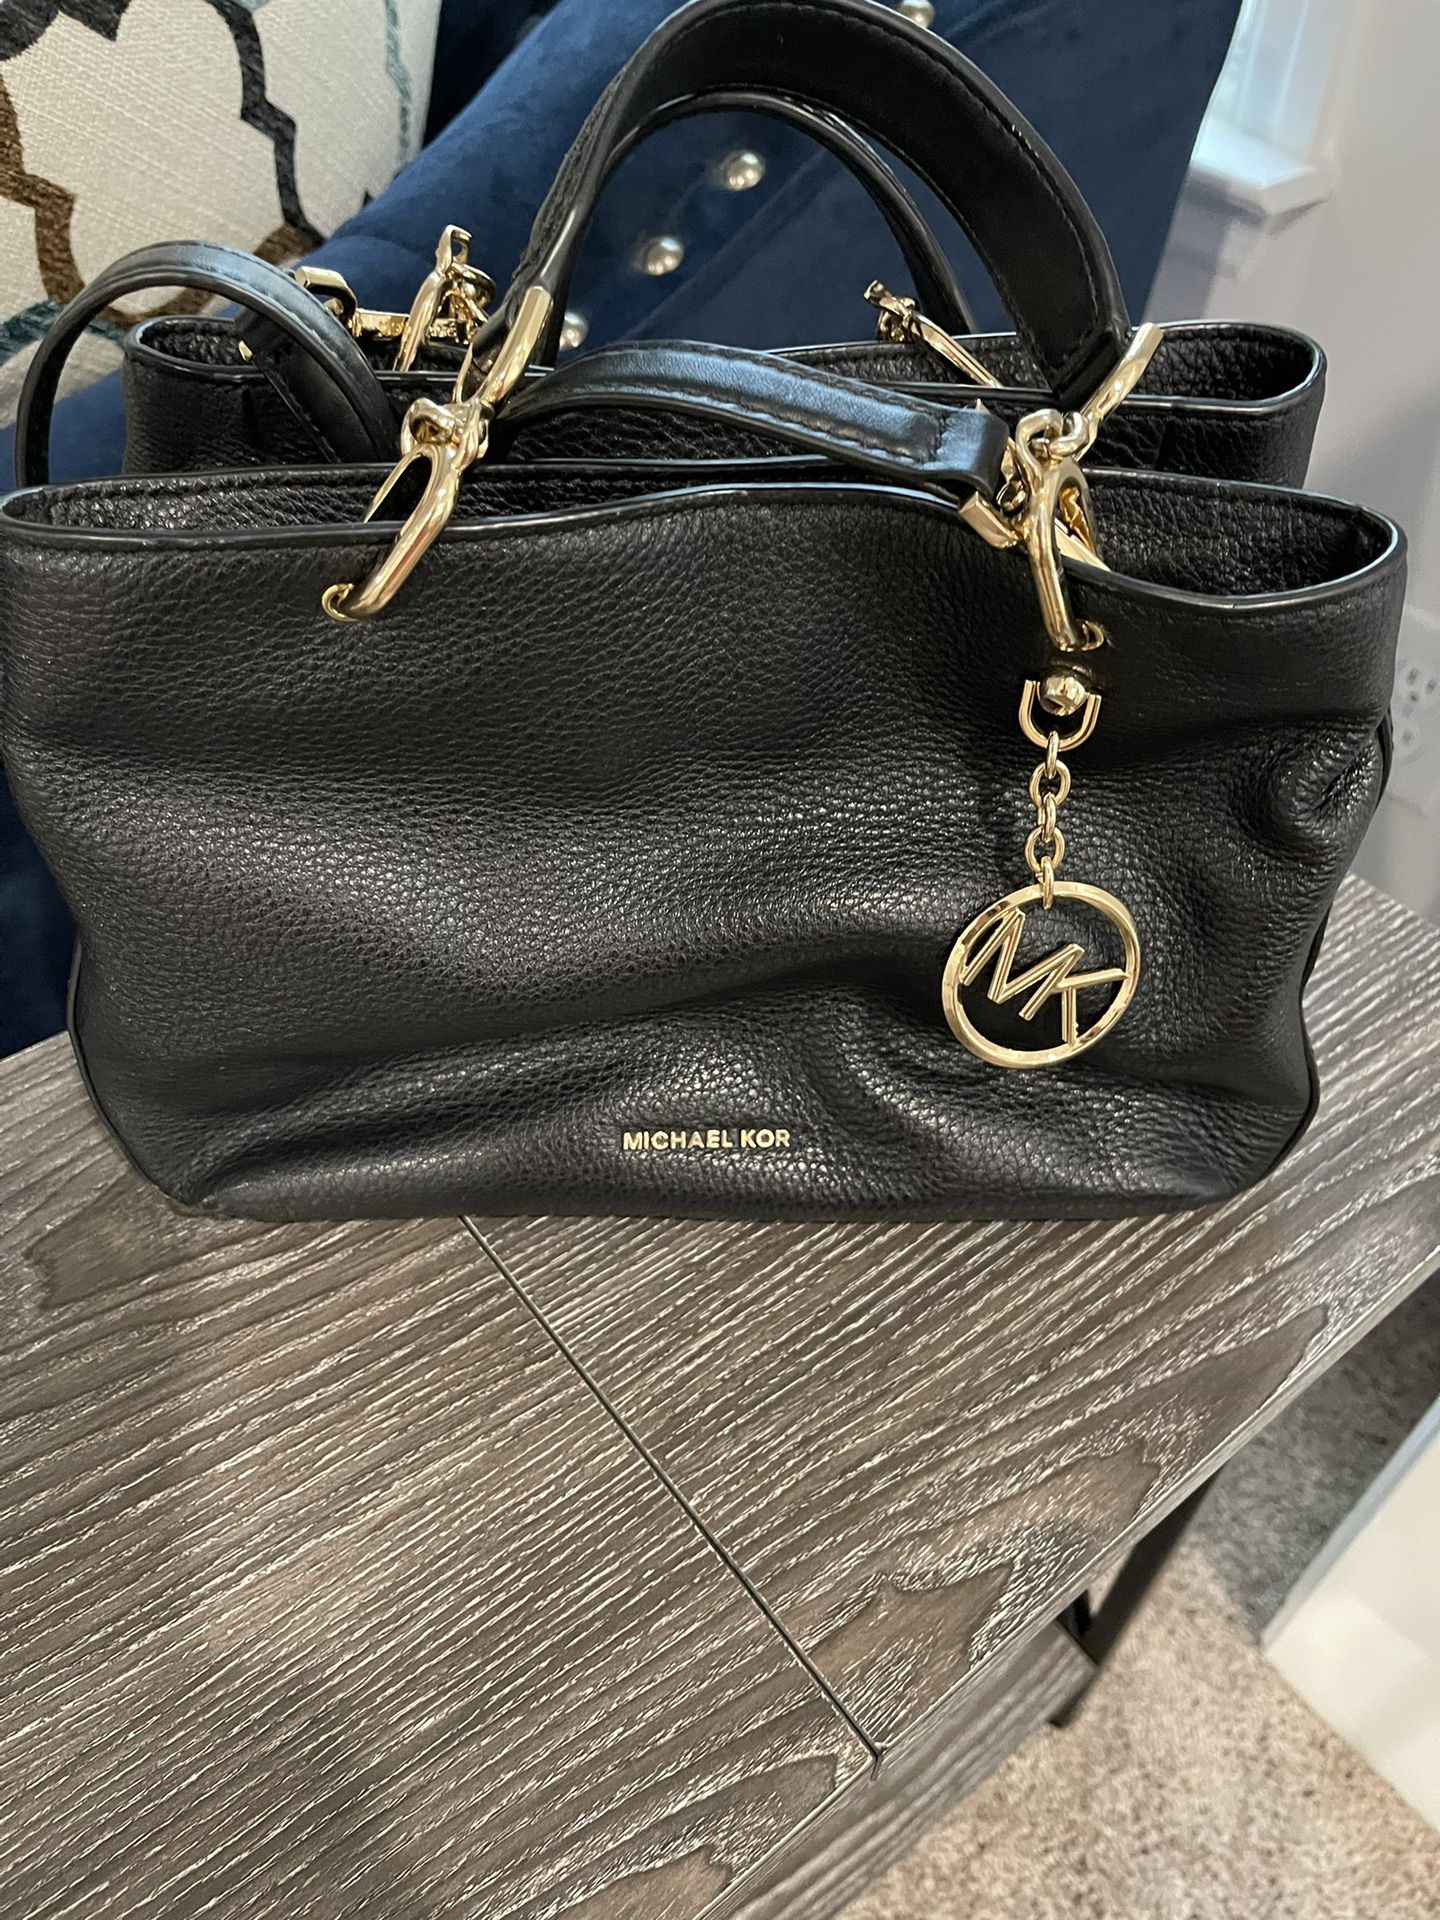 Michael Kors Black Leather Handbag 